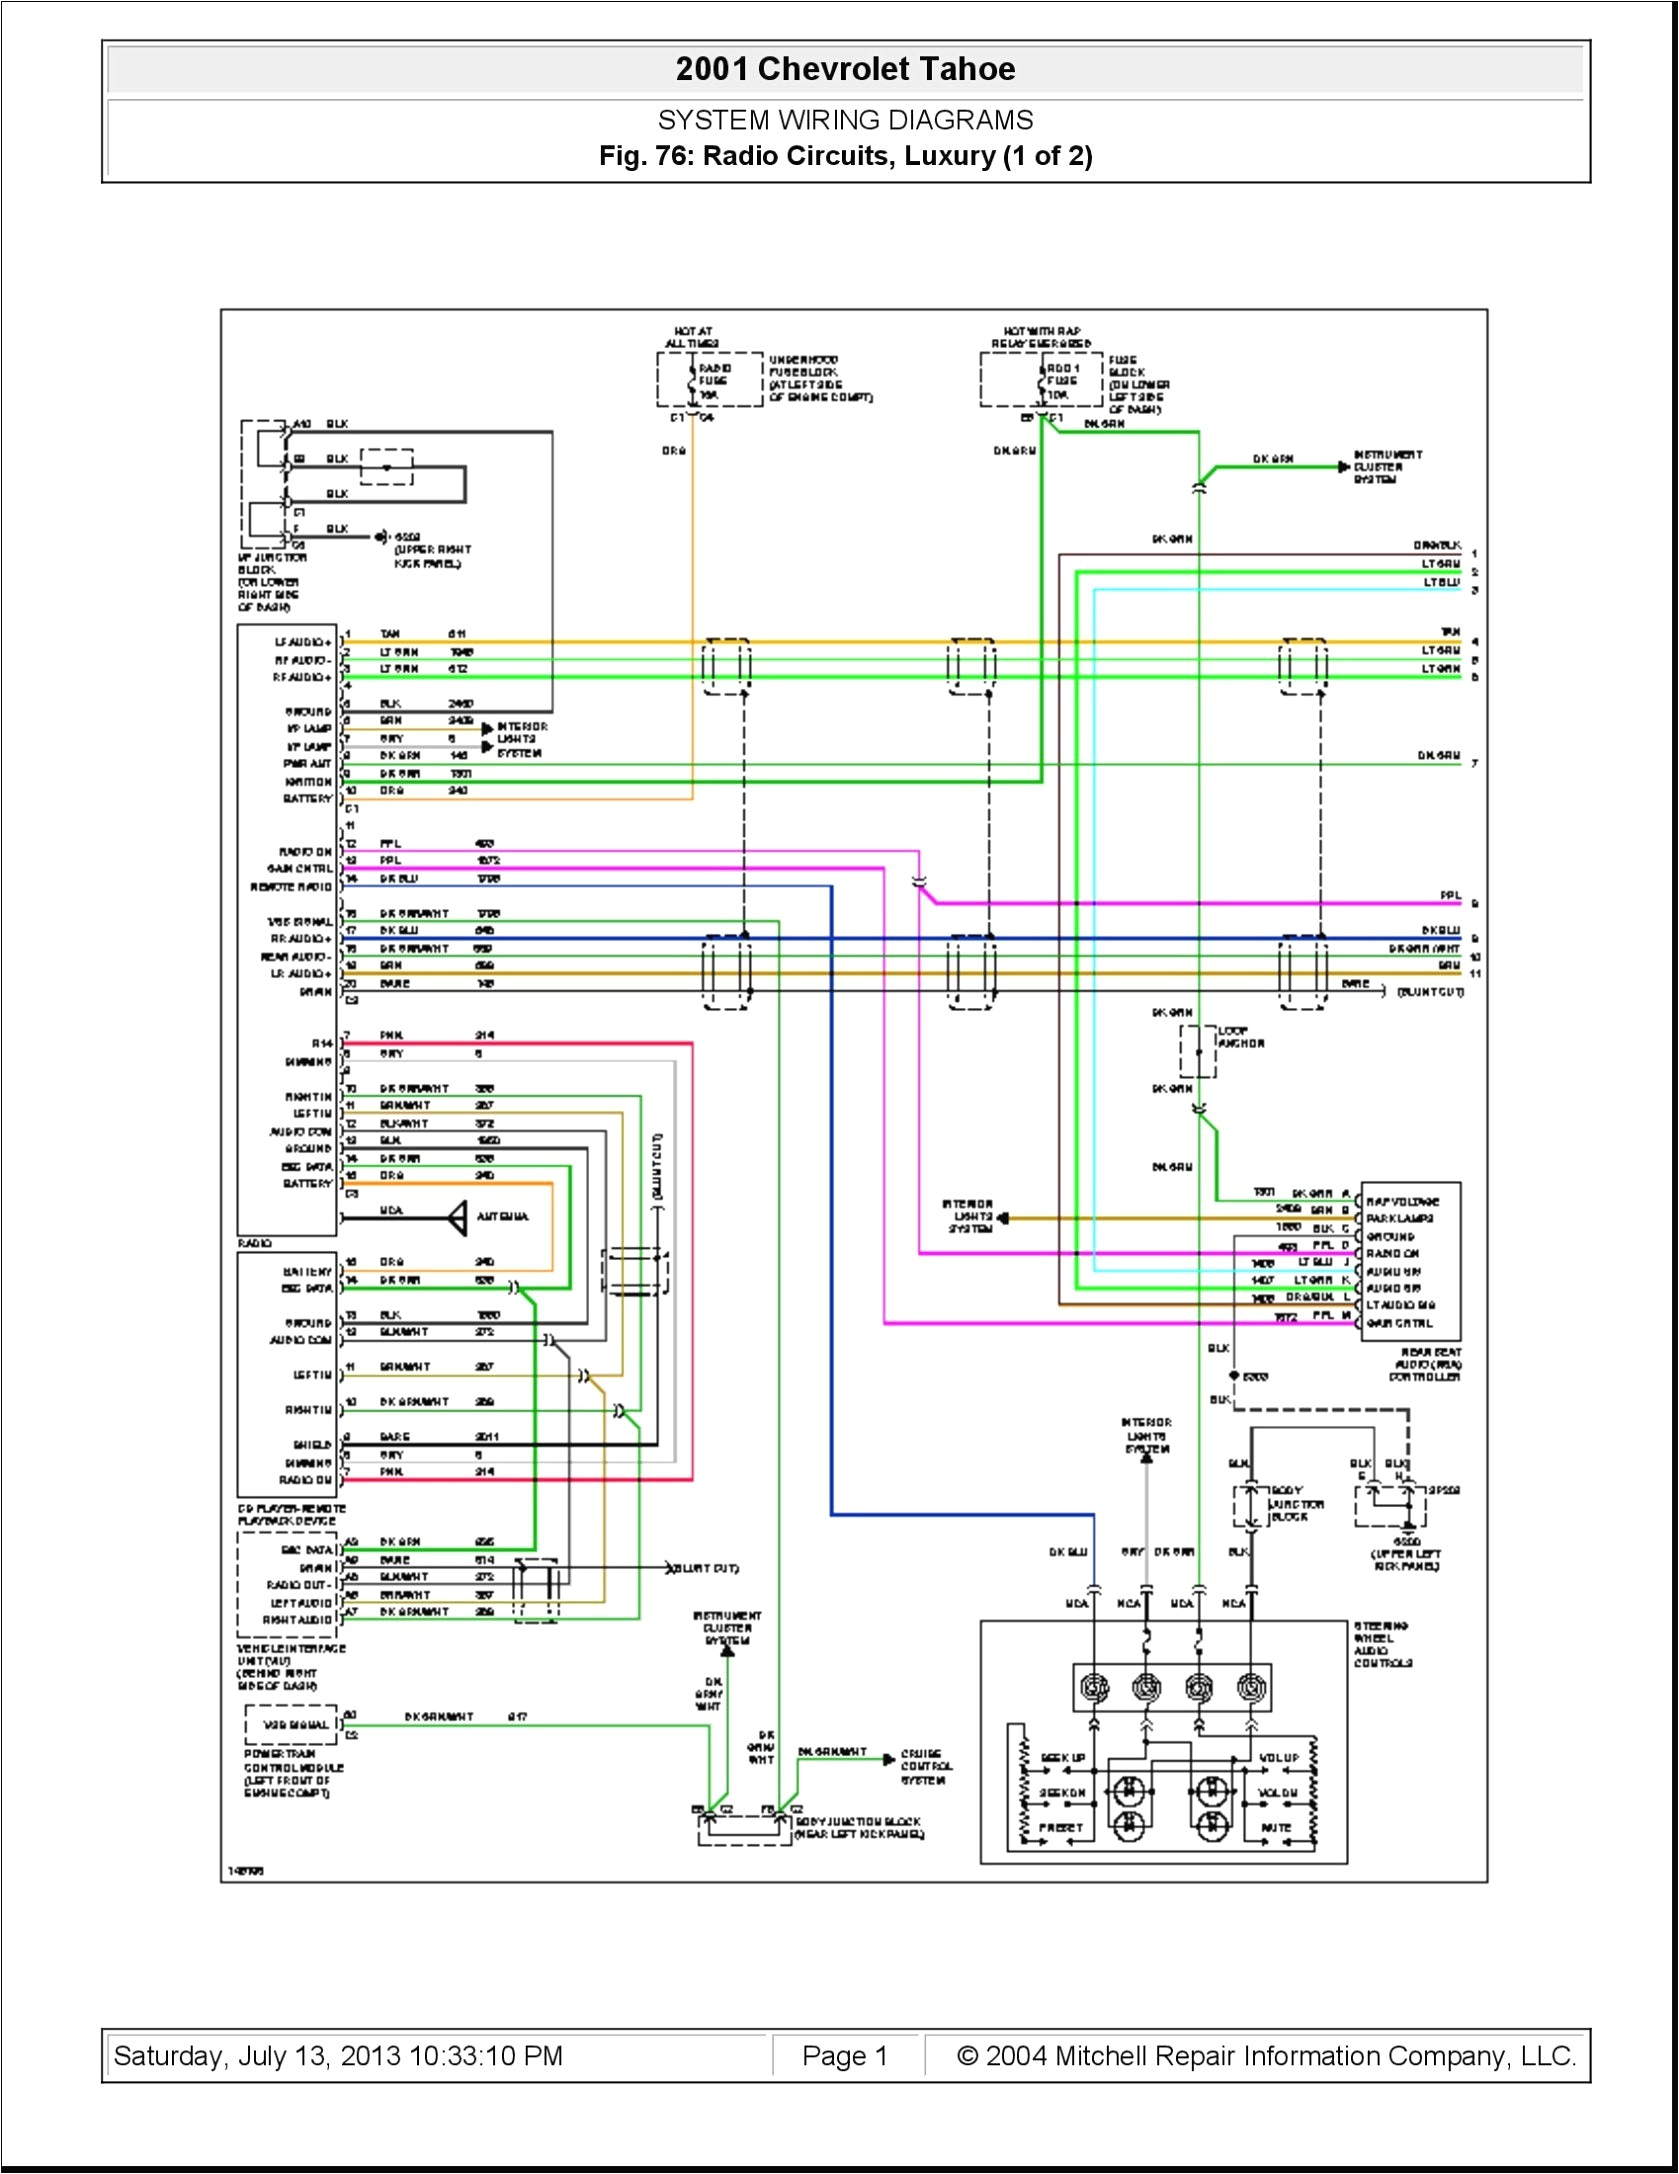 motorola astro wiring diagram wiring diagram all astro wiring diagram data schematic diagram motorola astro wiring